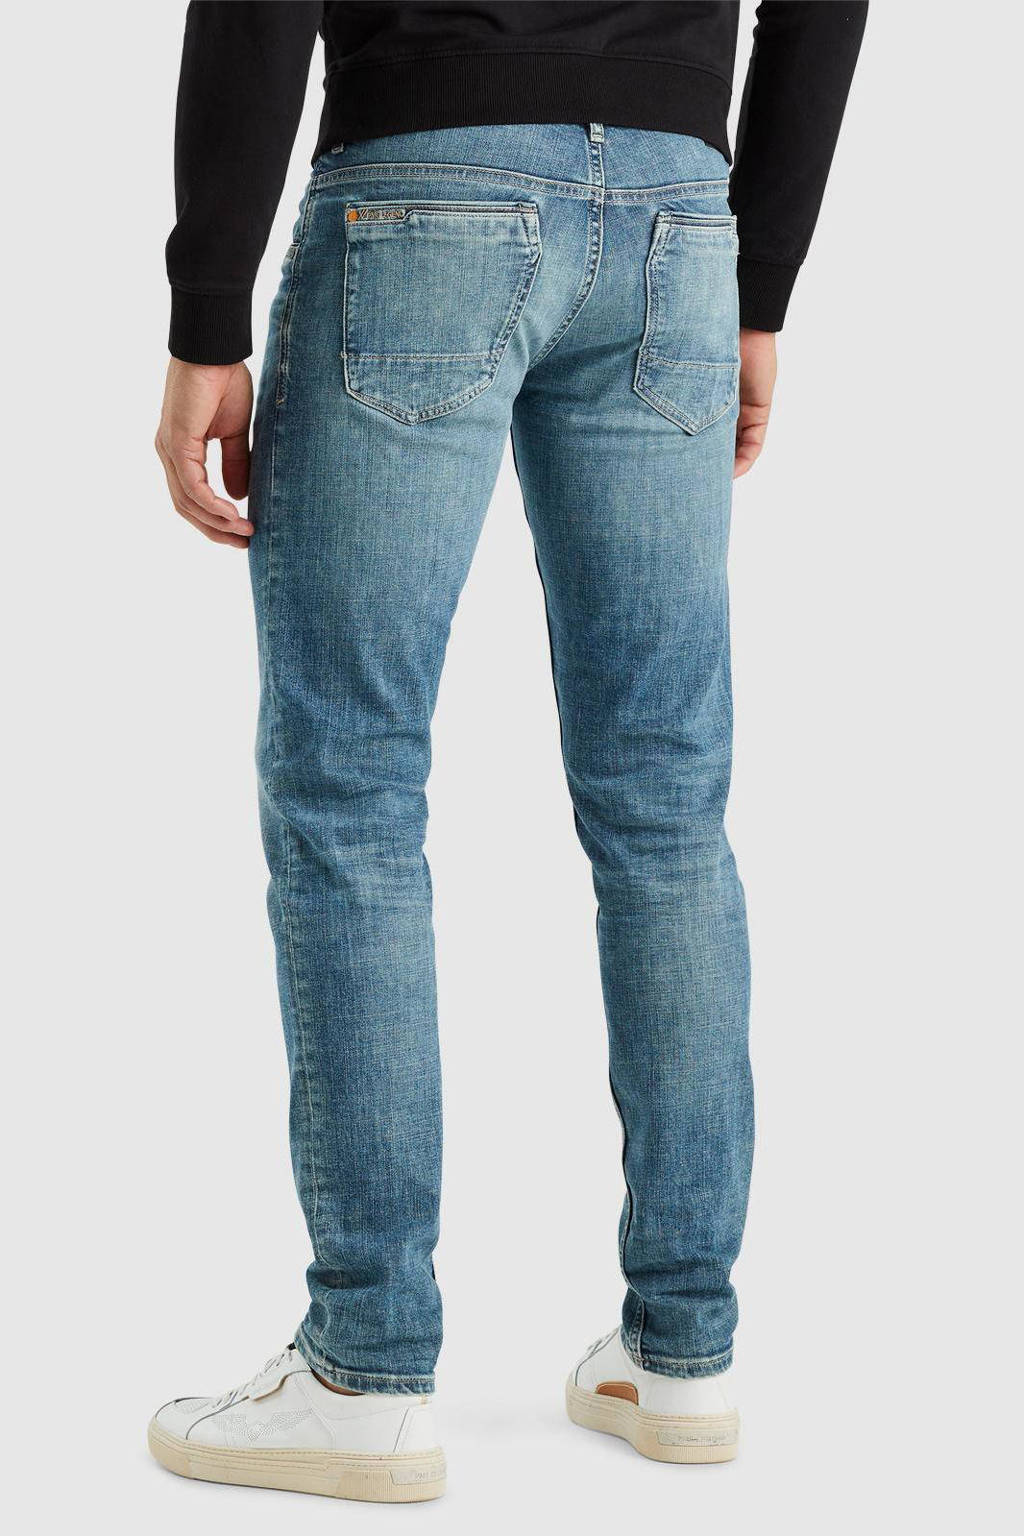 PME Legend slim fit jeans | DENIM XV bright blue wehkamp air